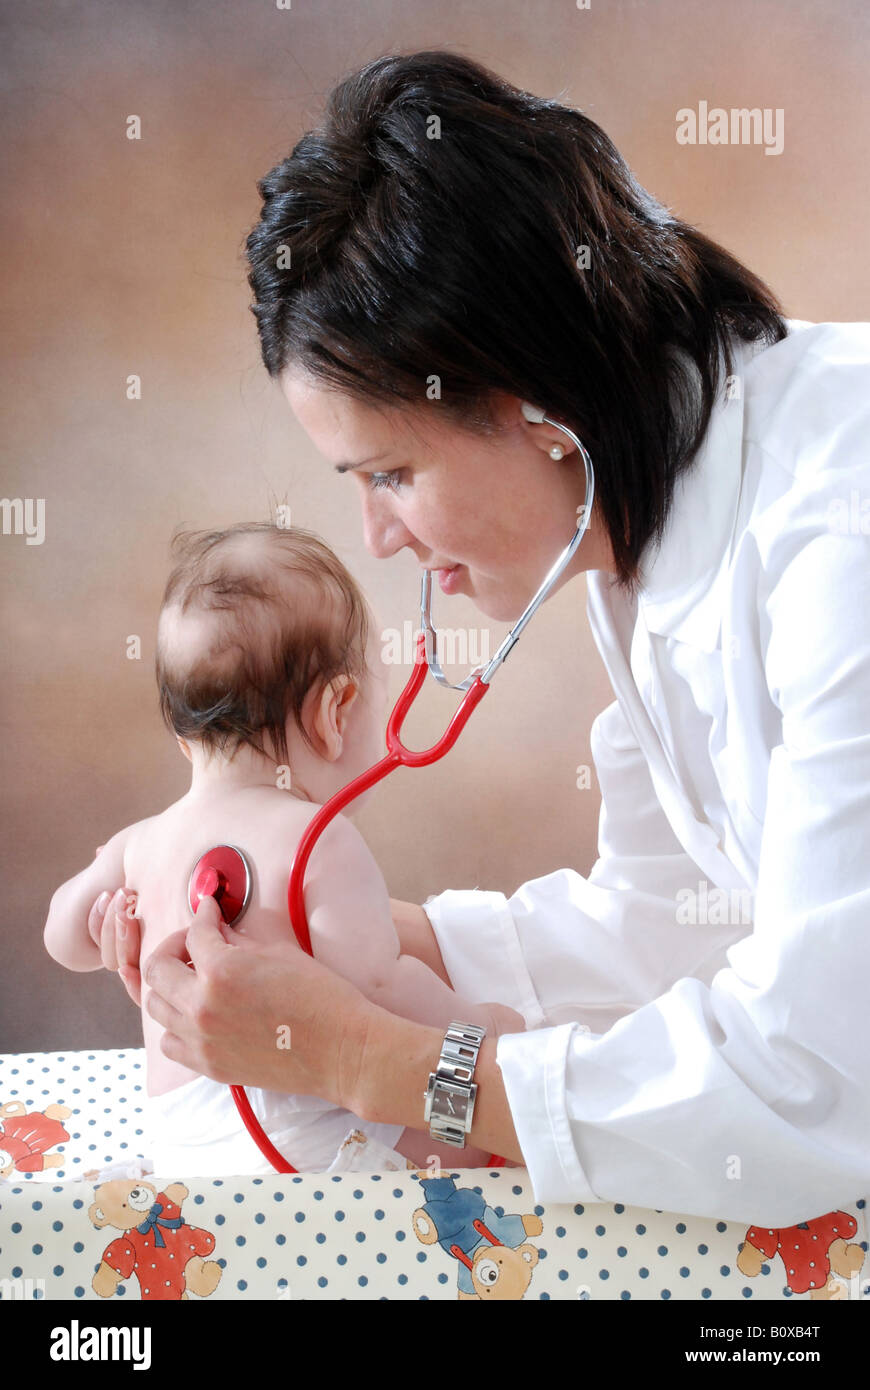 paediatrician with baby Stock Photo